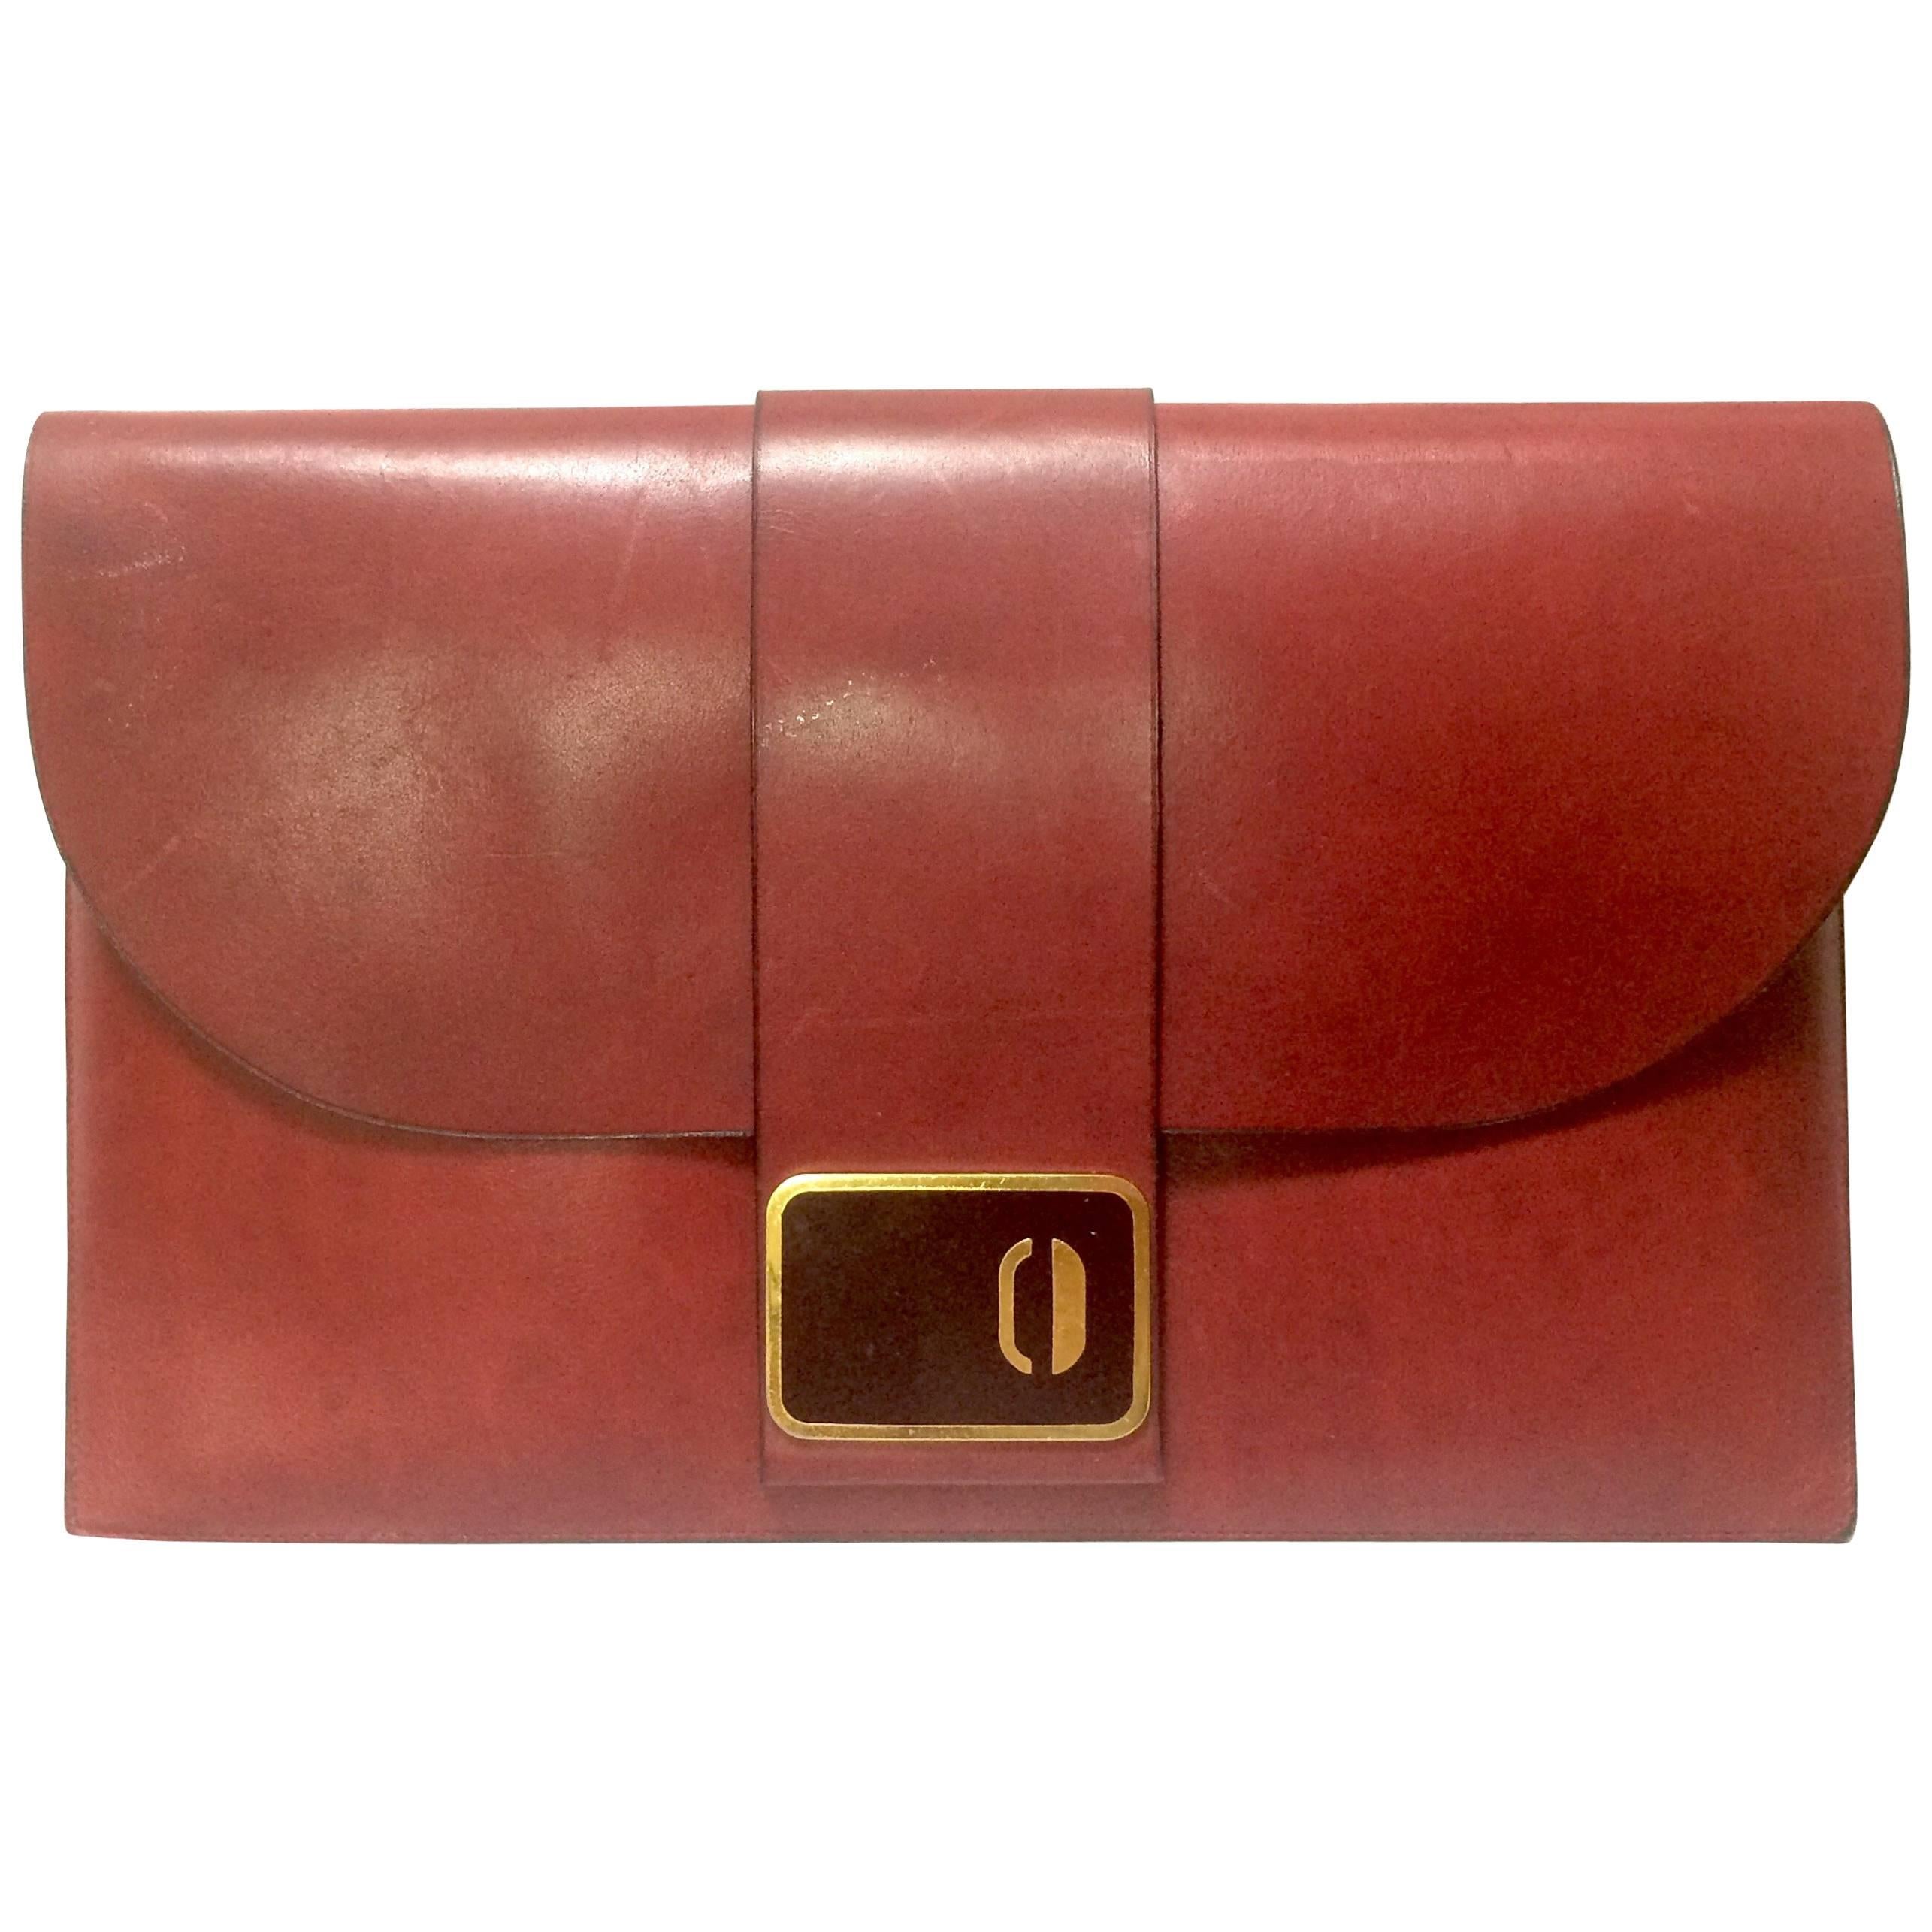 Vintage Christian Dior wine leather document, portfolio case bag. Unisex purse.